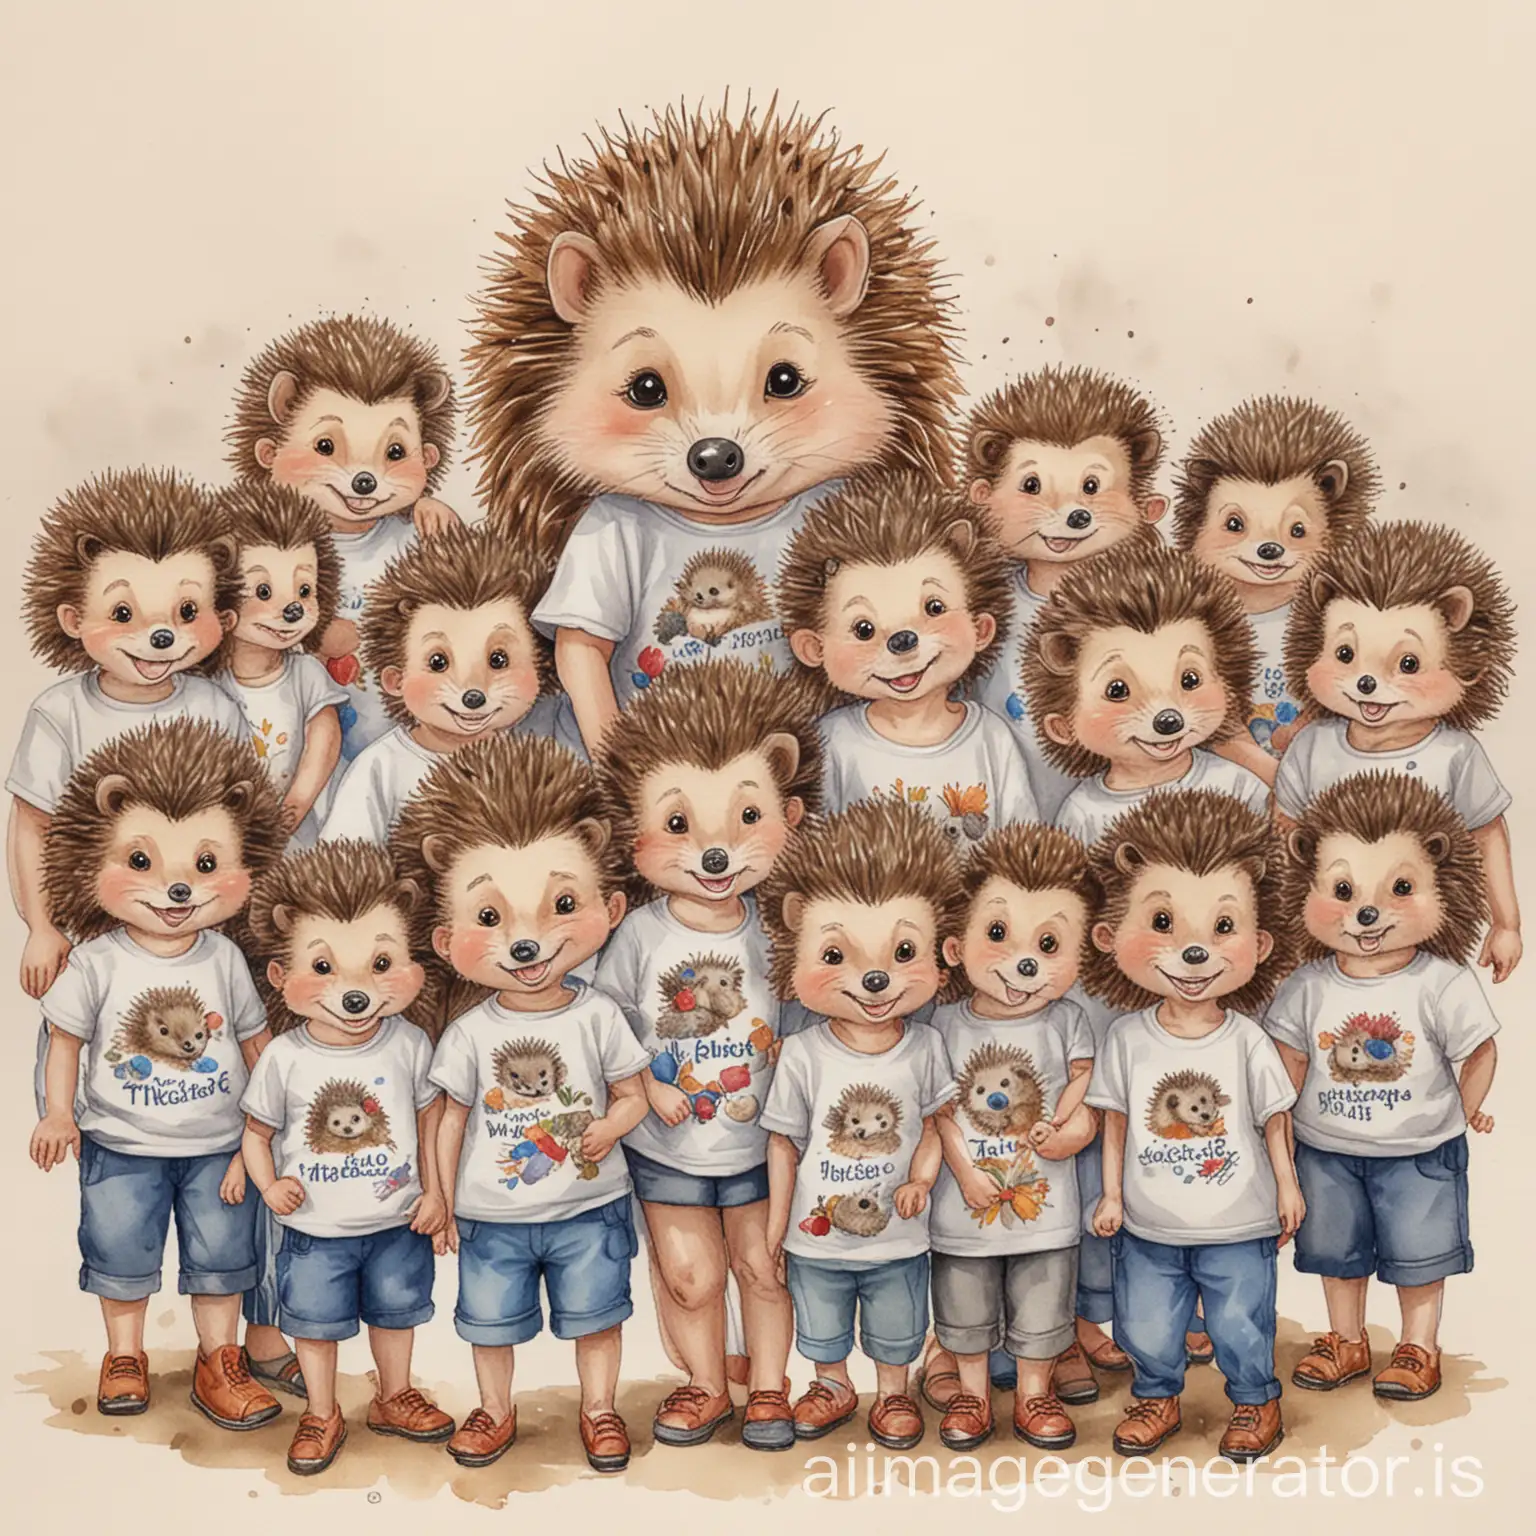 aquarelle drawing of cute Mrs. hedgehog kindergarten teacher with 8 boys hedgehogs pupils and 12 girls hedgehogs pupils wearing tshirts